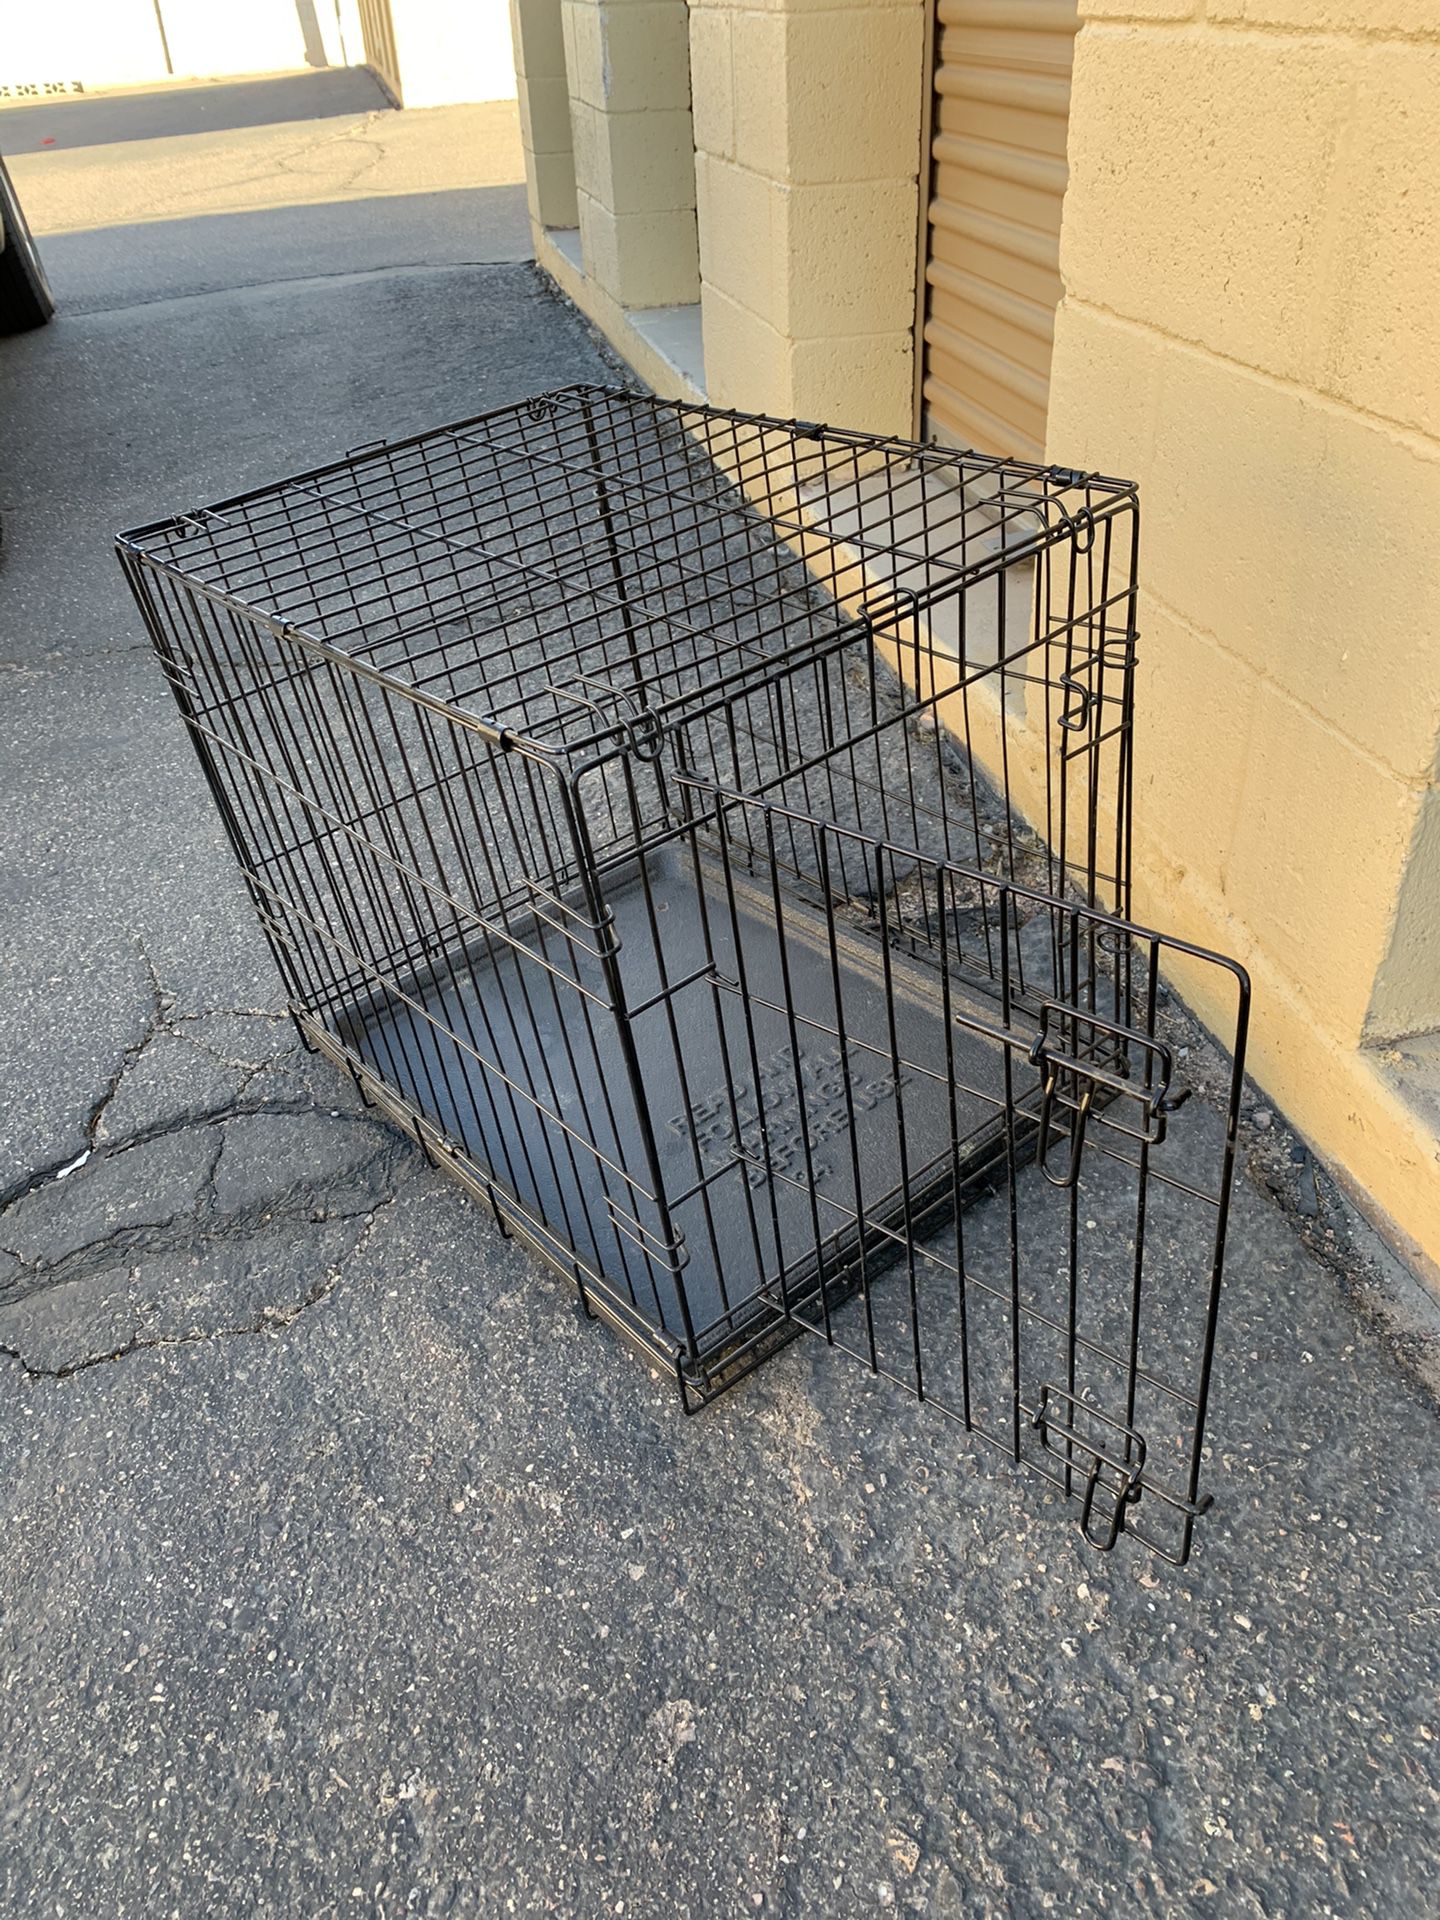 Medium sized dog crate